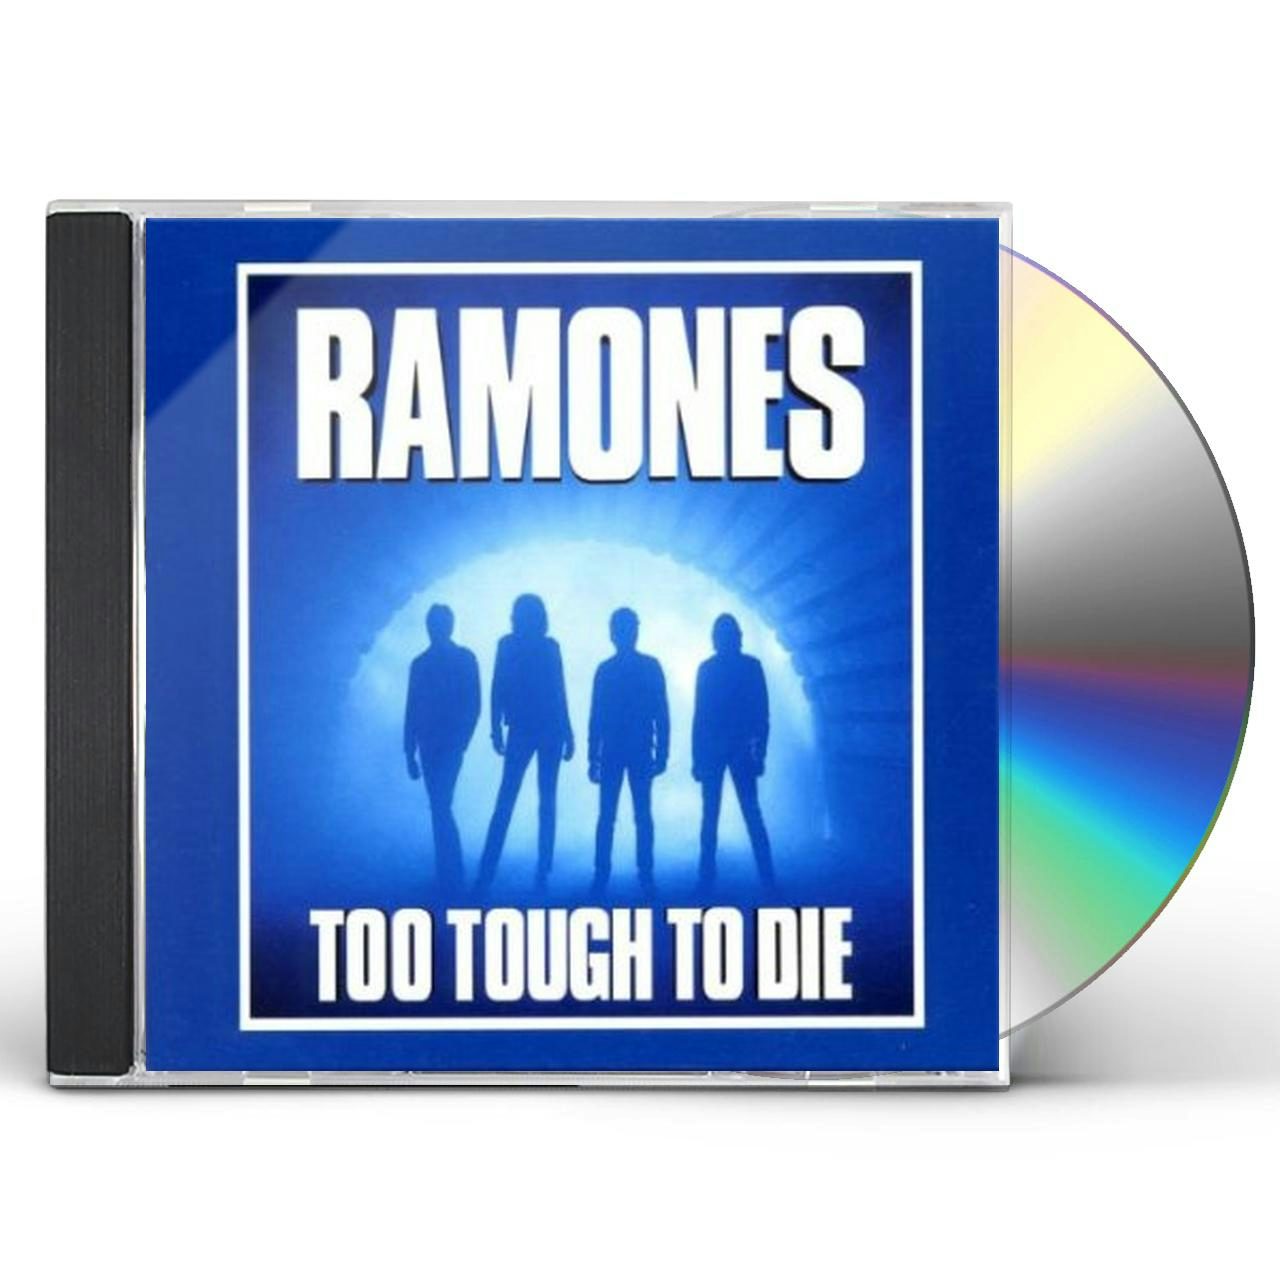 Ramones Too Tough To Dies Cd 1969 probe 16 (durango 95) from movie a clockwork orange (1971): merchbar